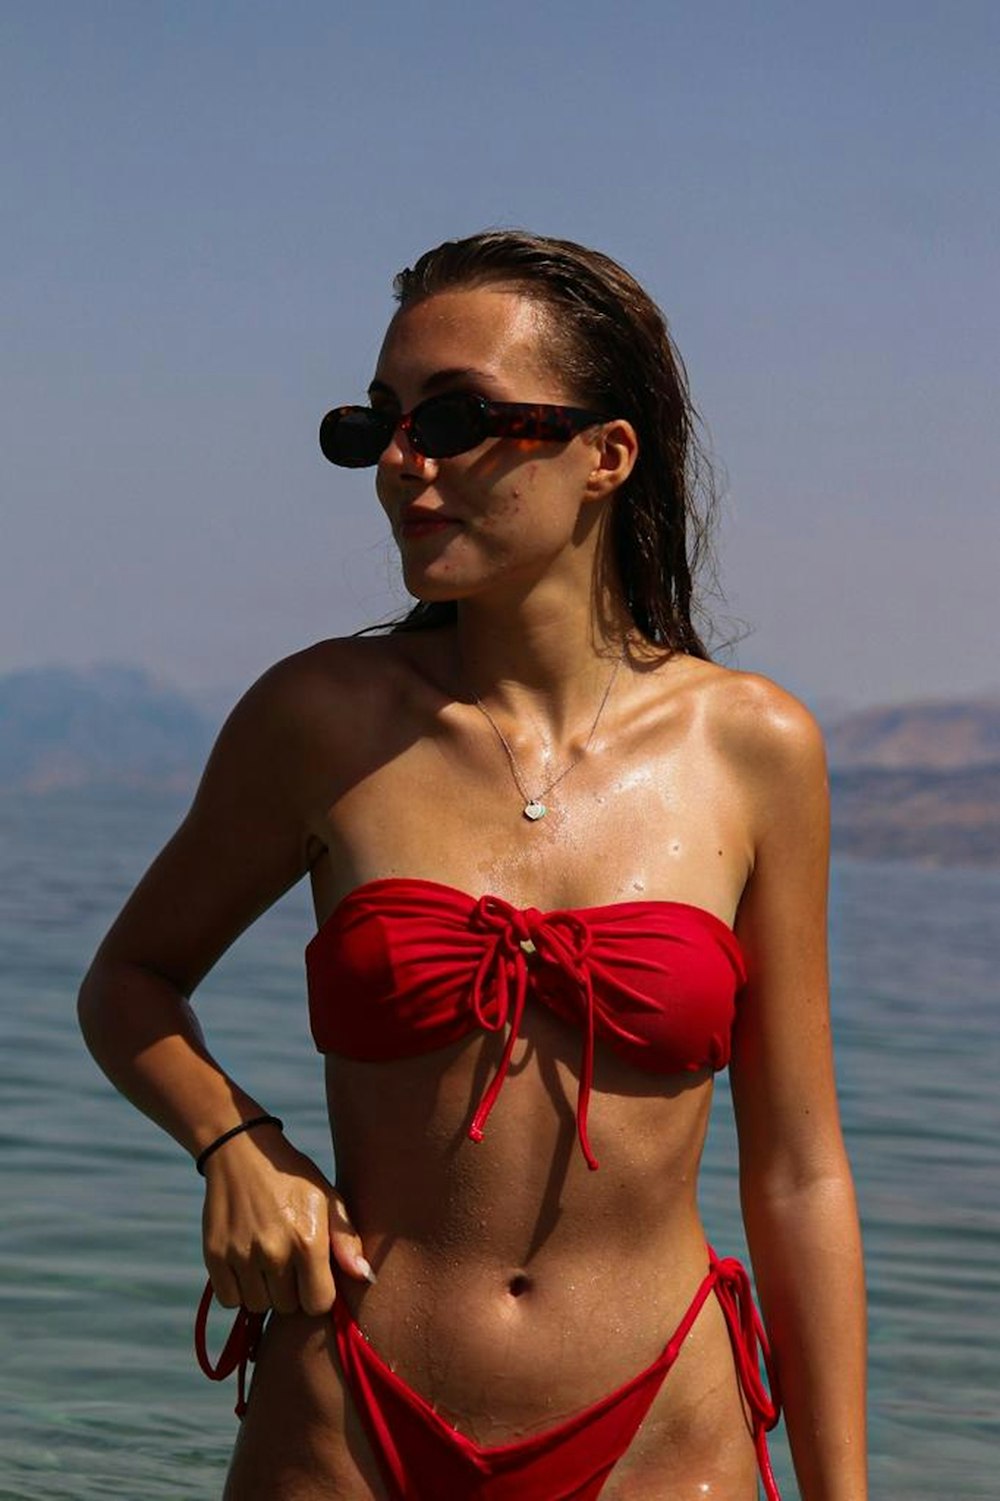 Woman in red strapless bikini top wearing black sunglasses photo – Free  Swimwear Image on Unsplash